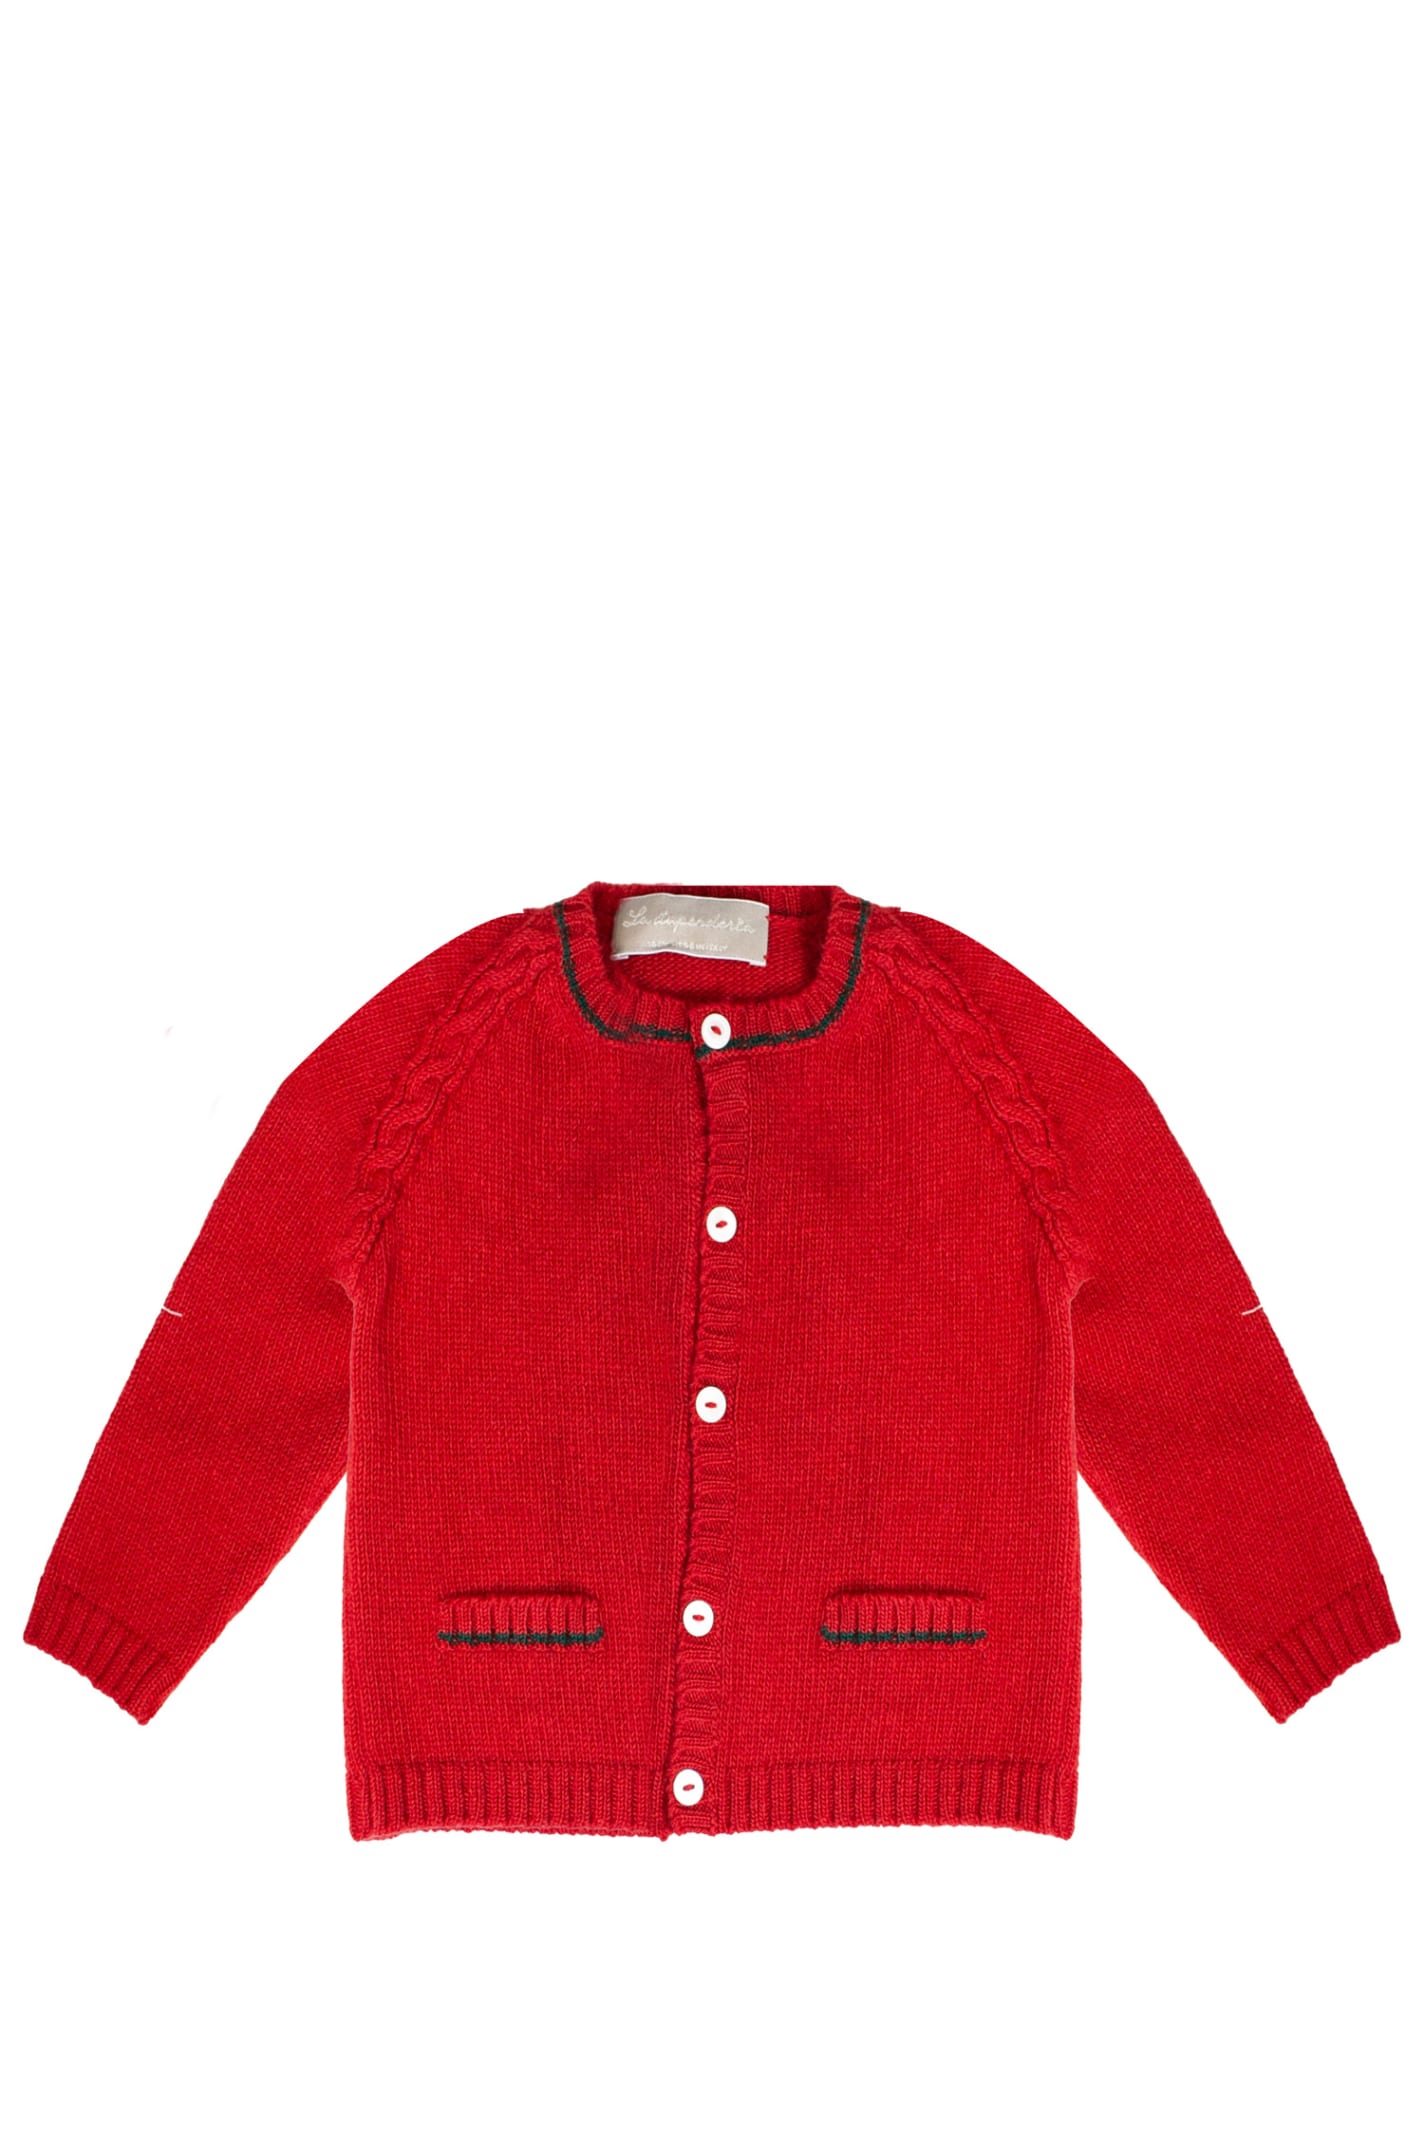 La Stupenderia Babies' Wool Sweater In Red